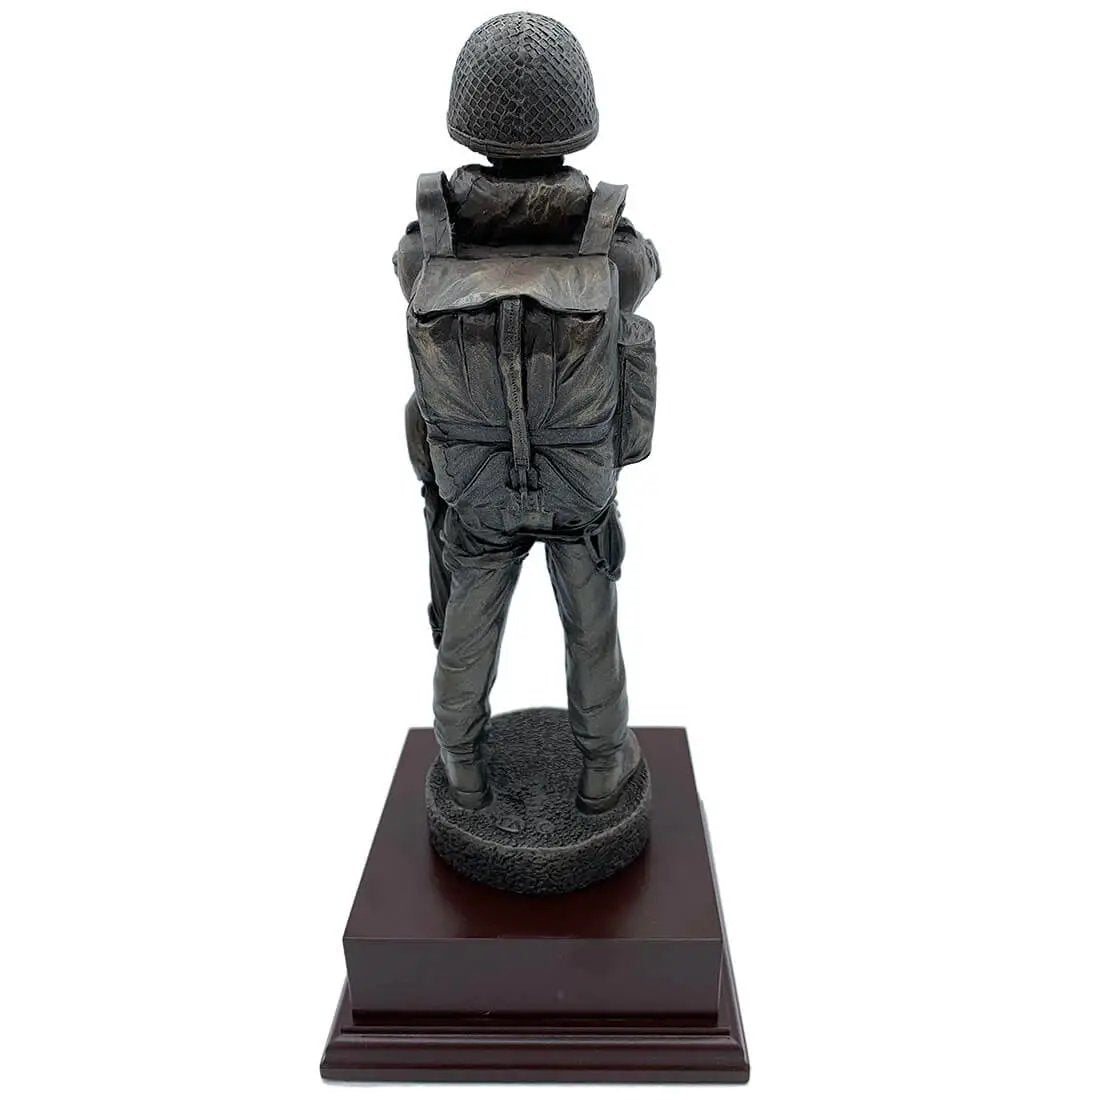 Airborne Drop Order Bronze Resin Figurine - John Bull Clothing